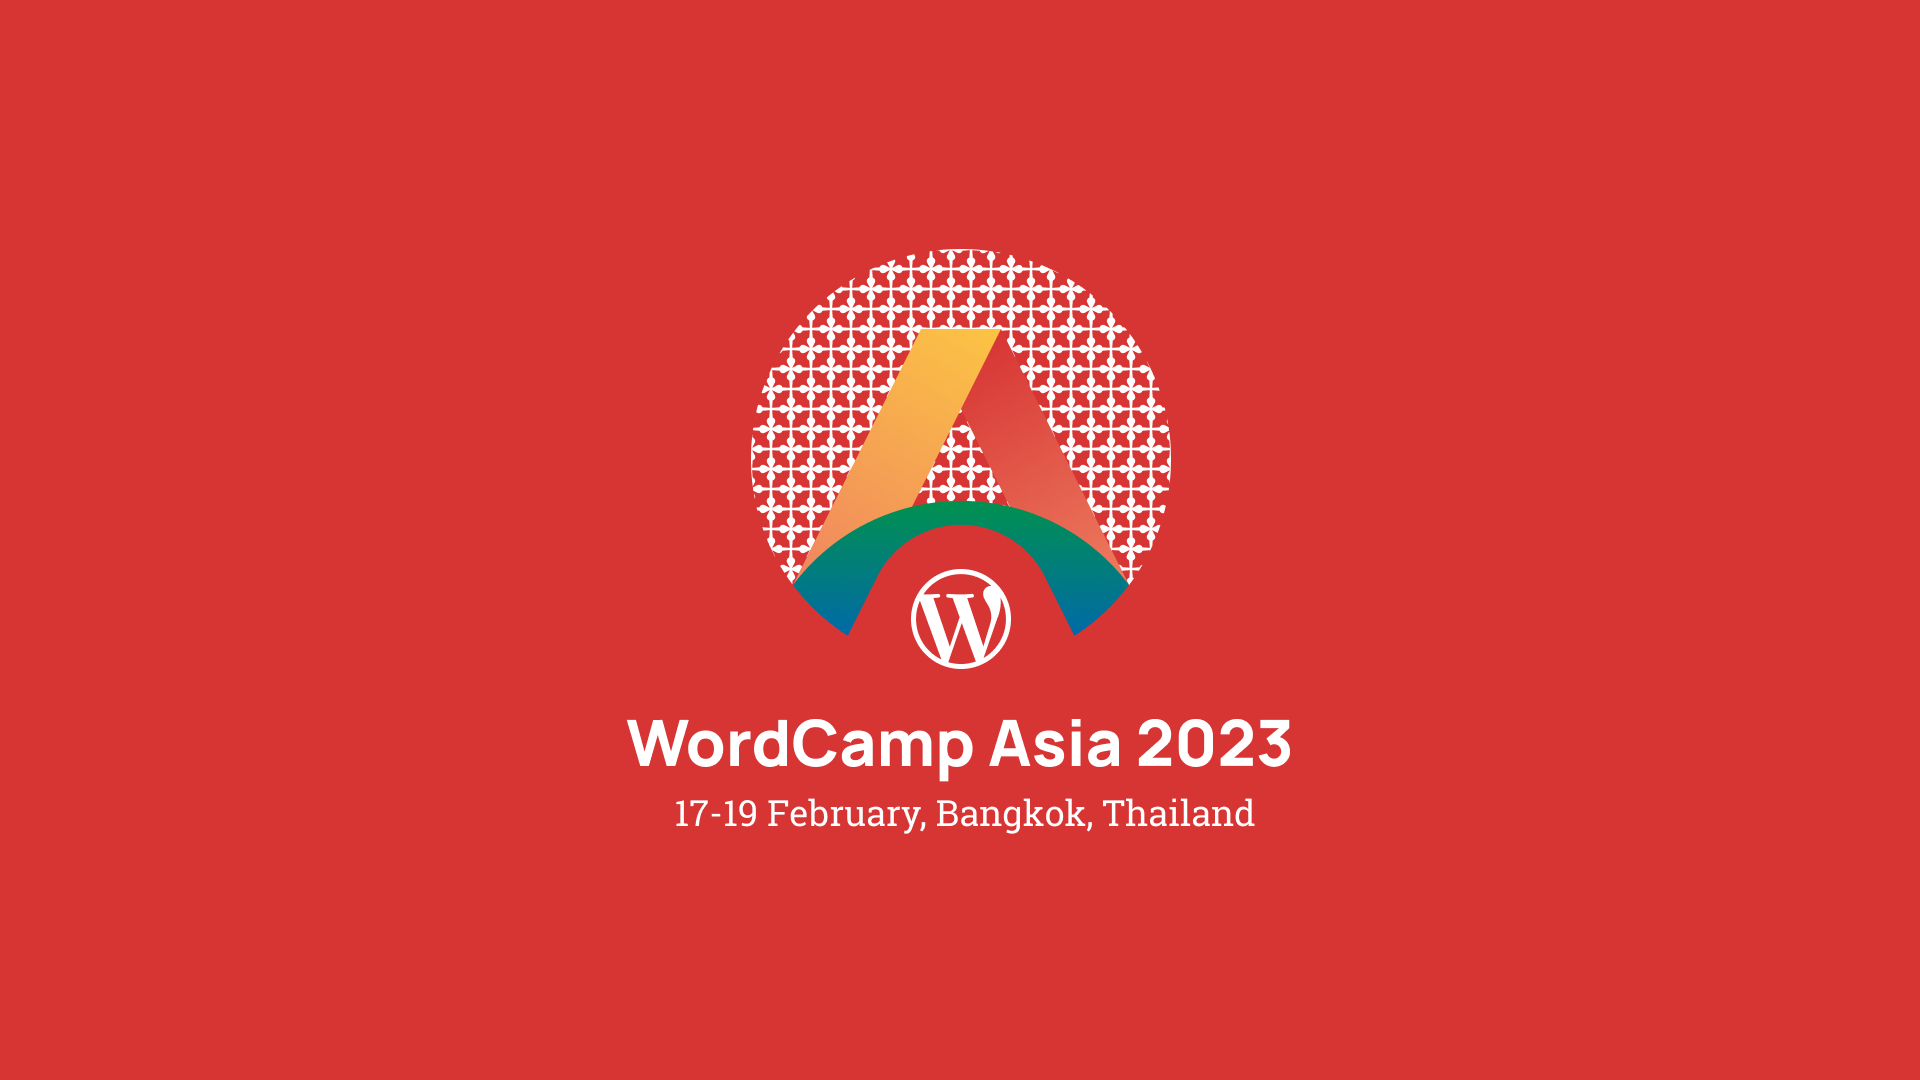 Speaking at WordCamp Asia 2023